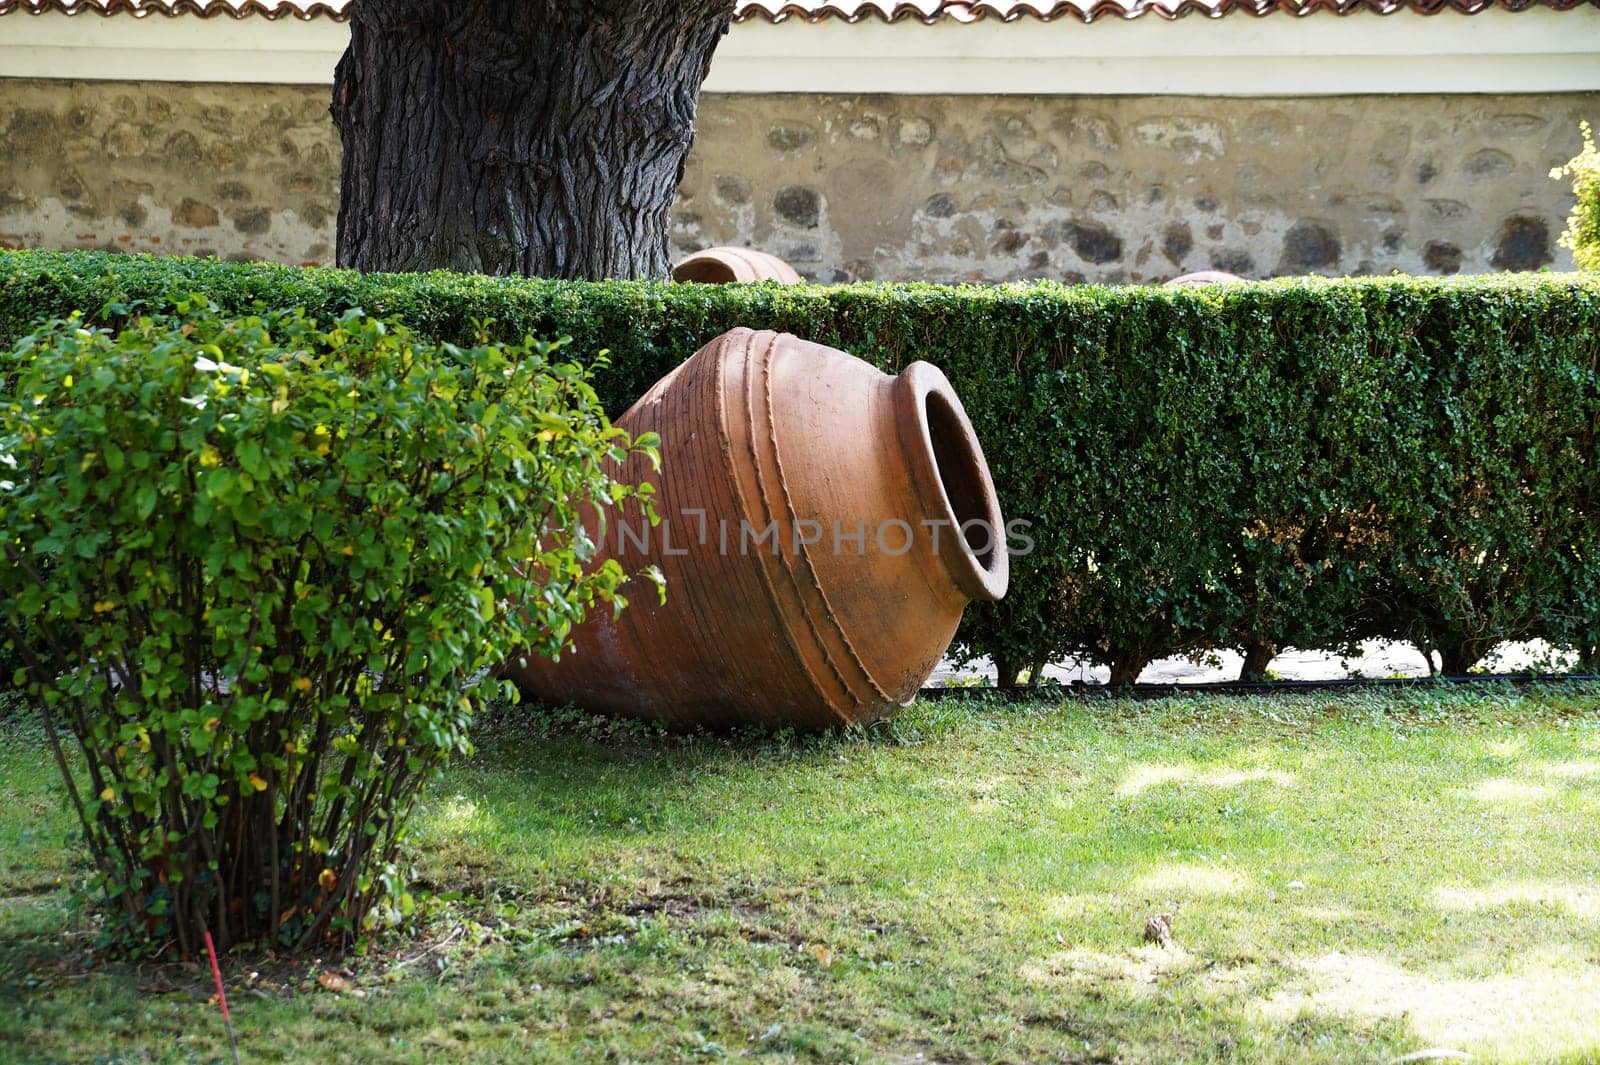 fallen clay jug as an element of landscape design in the garden by Annado